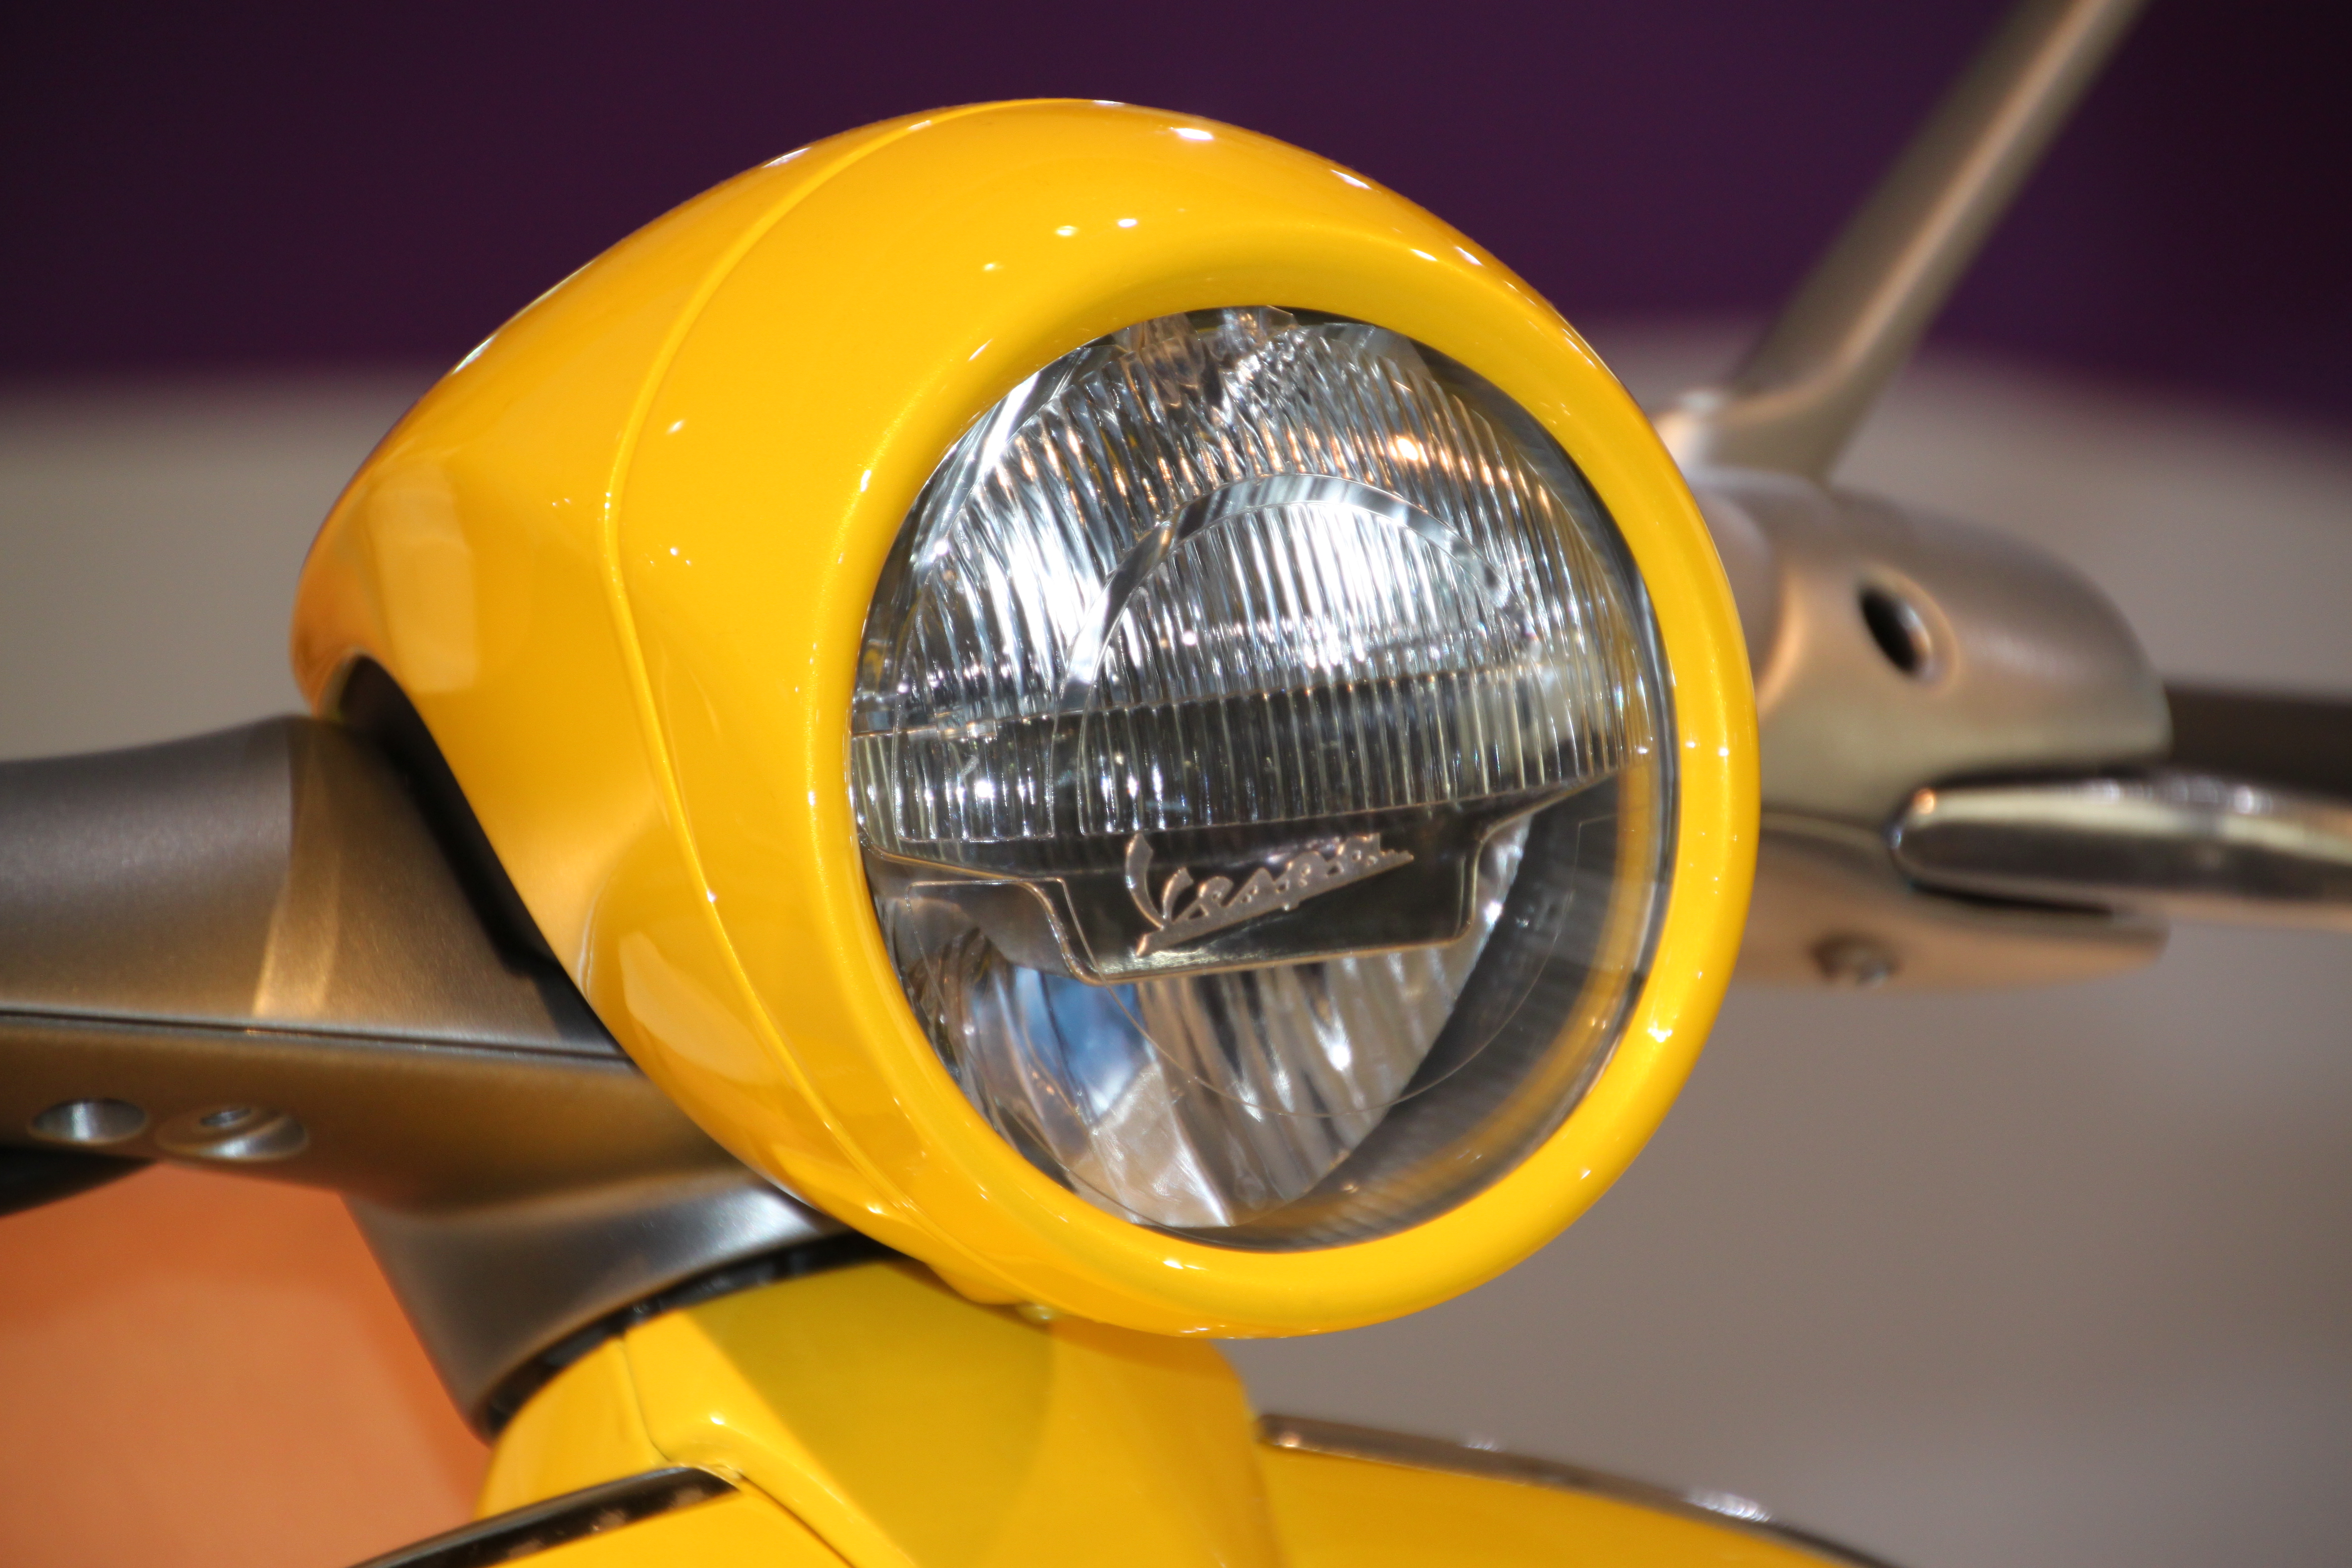 Vespa 946 downloader video. Lucas 700 Headlight. Фара для скутера Веспа. Vespa с фарой на крыле. Веспа жёлтая и жёлтый шлем.